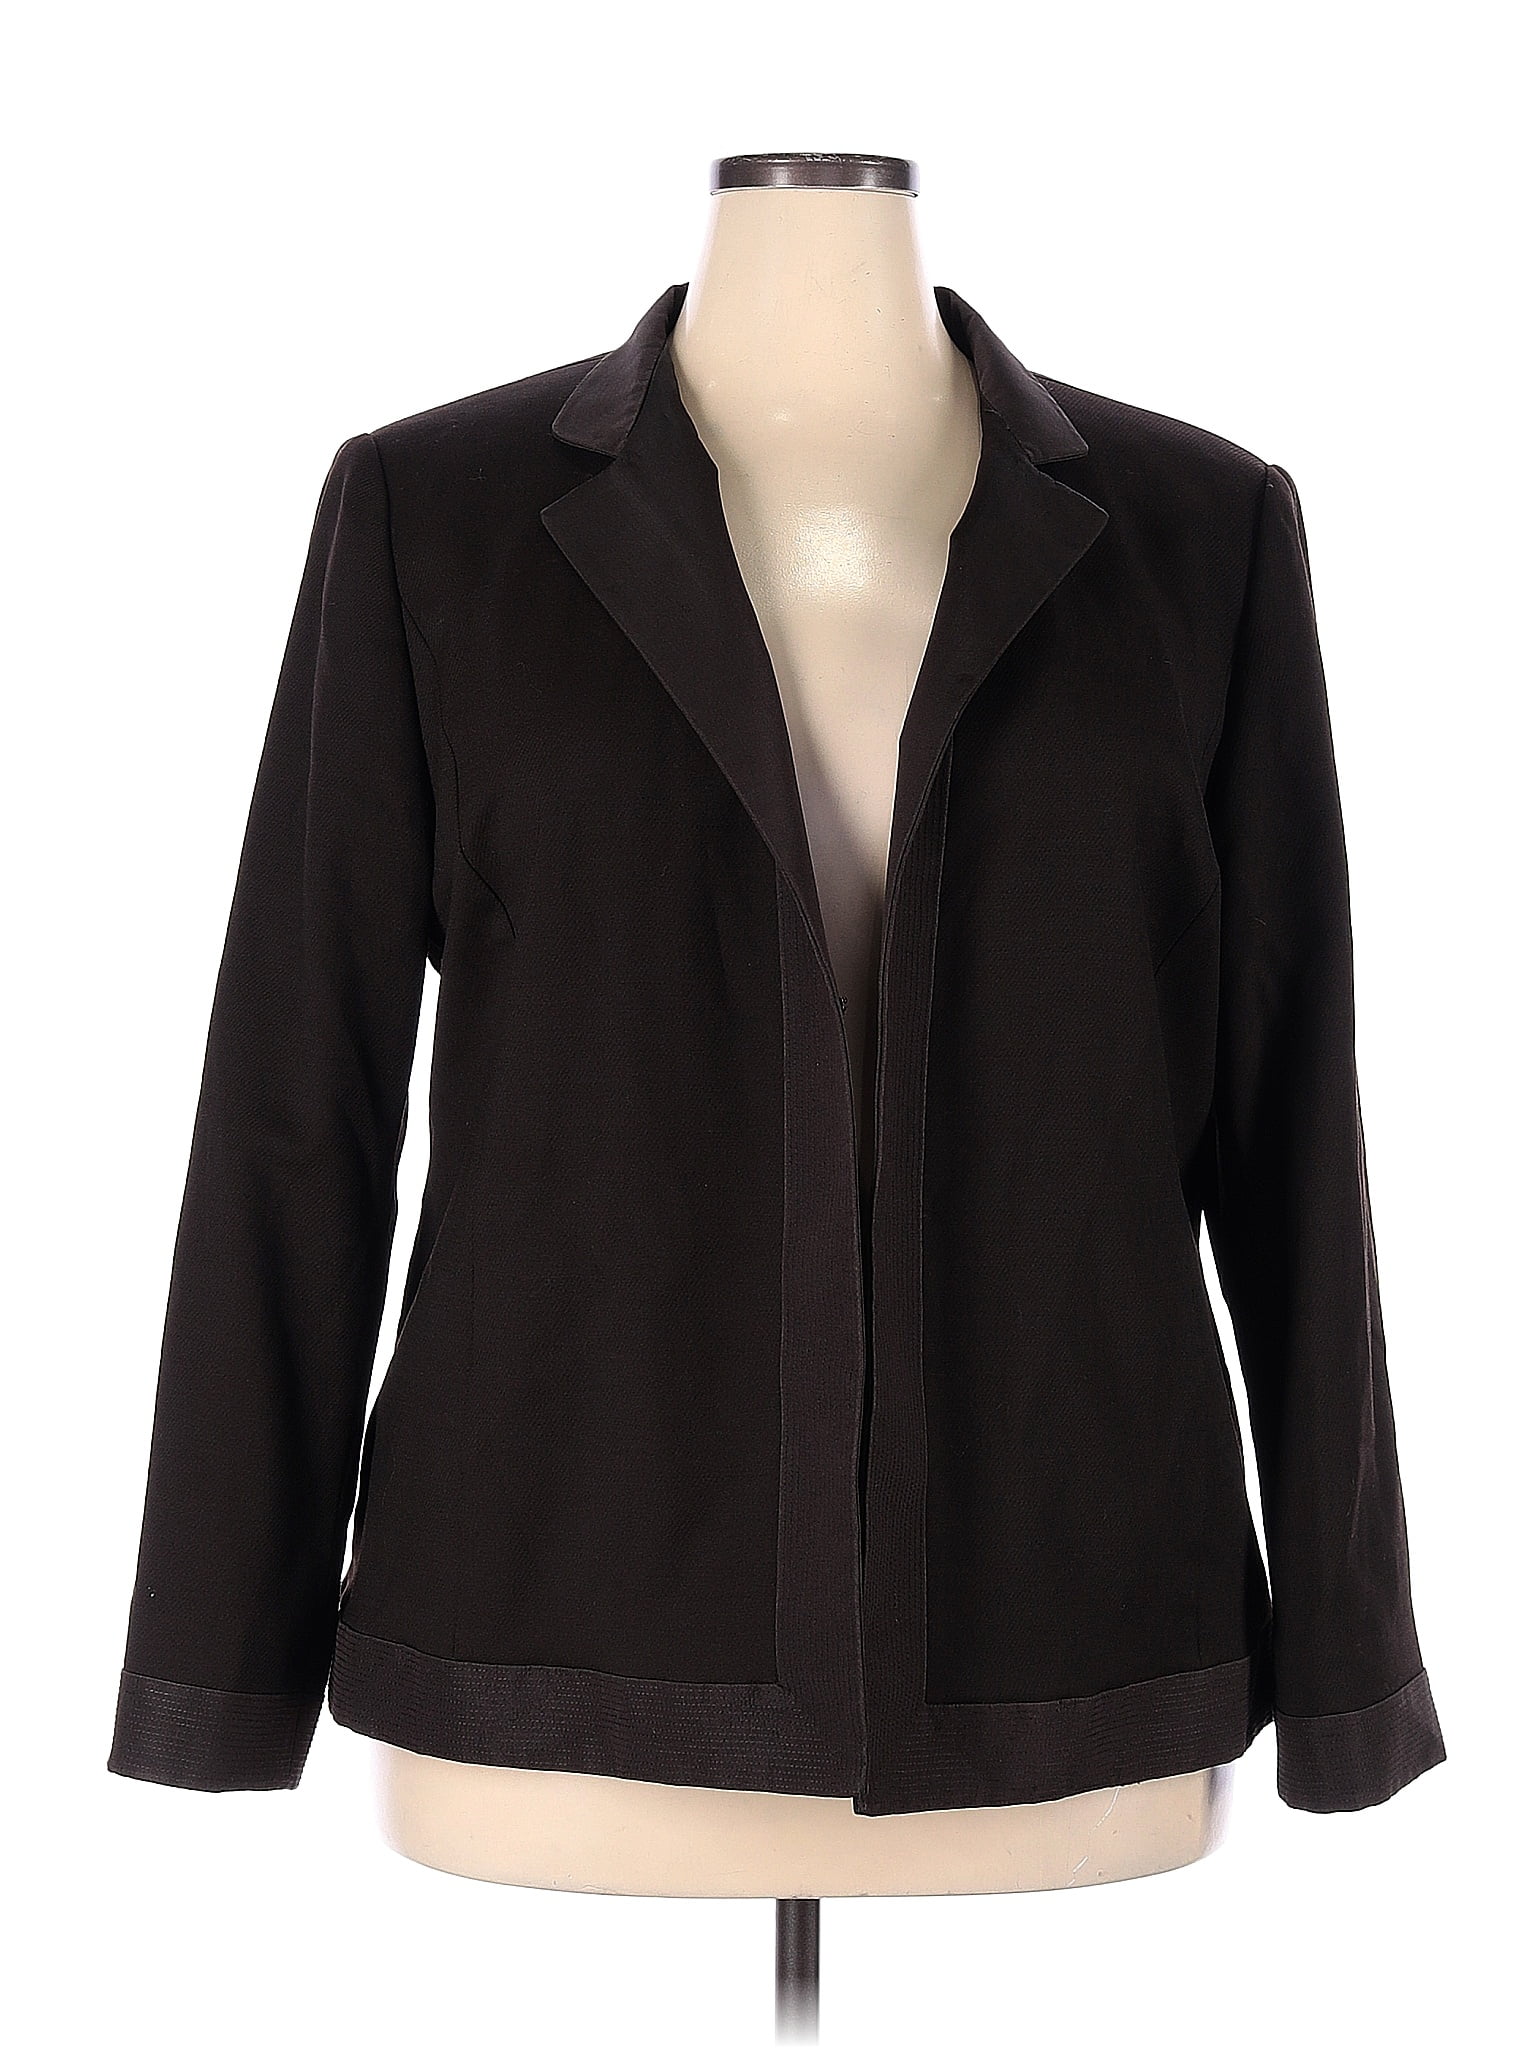 Linda Allard Ellen Tracy Solid Brown Jacket Size 20 (Plus) - 79% off ...